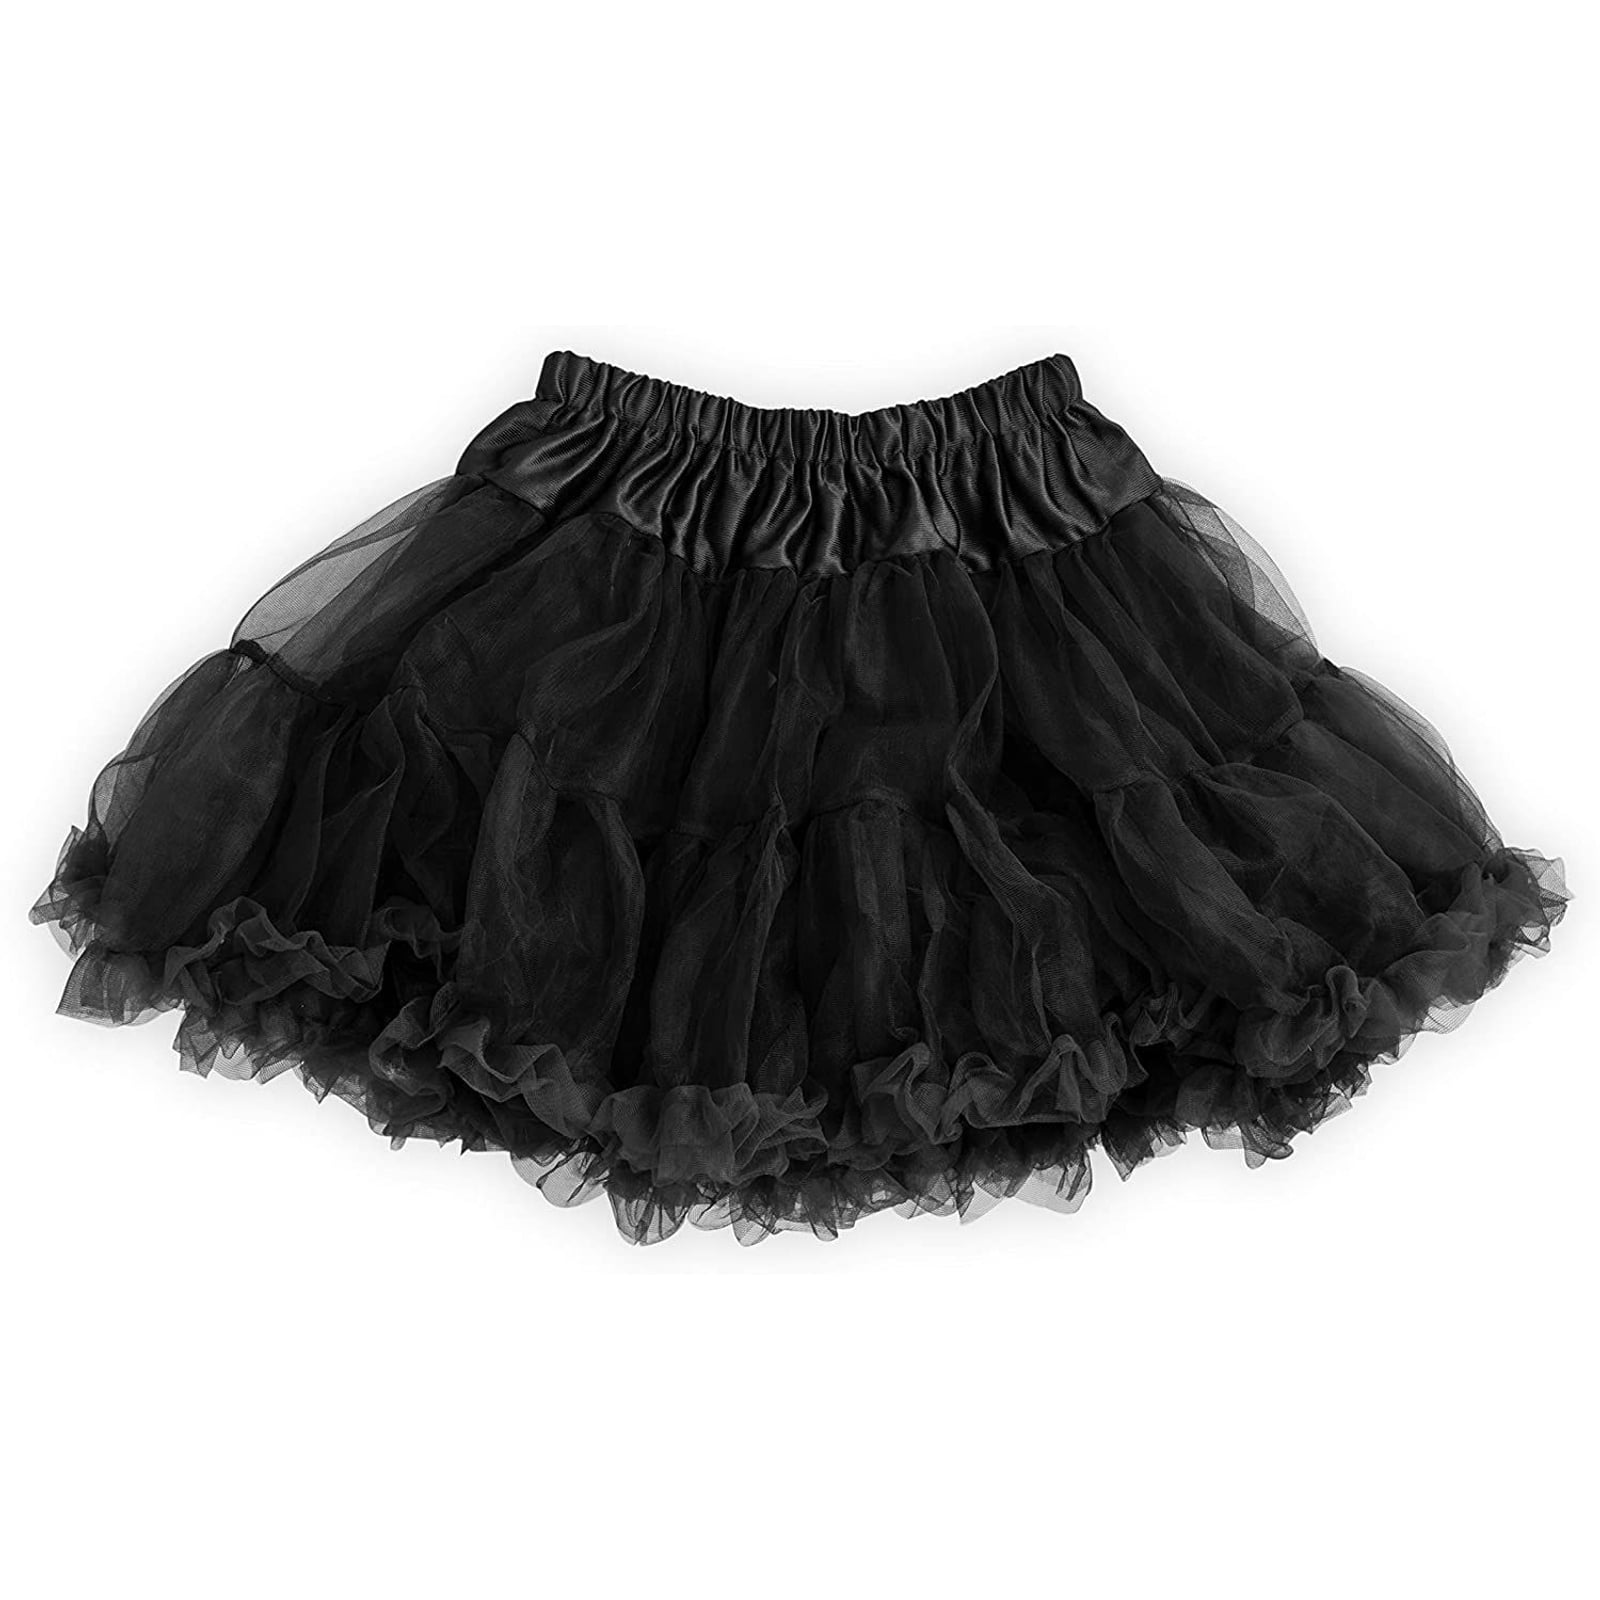 My Choice Stuff Girls Children Fancy Dress Party Wear 2 Layer Petticoat Christmas Tu Tu Skirt